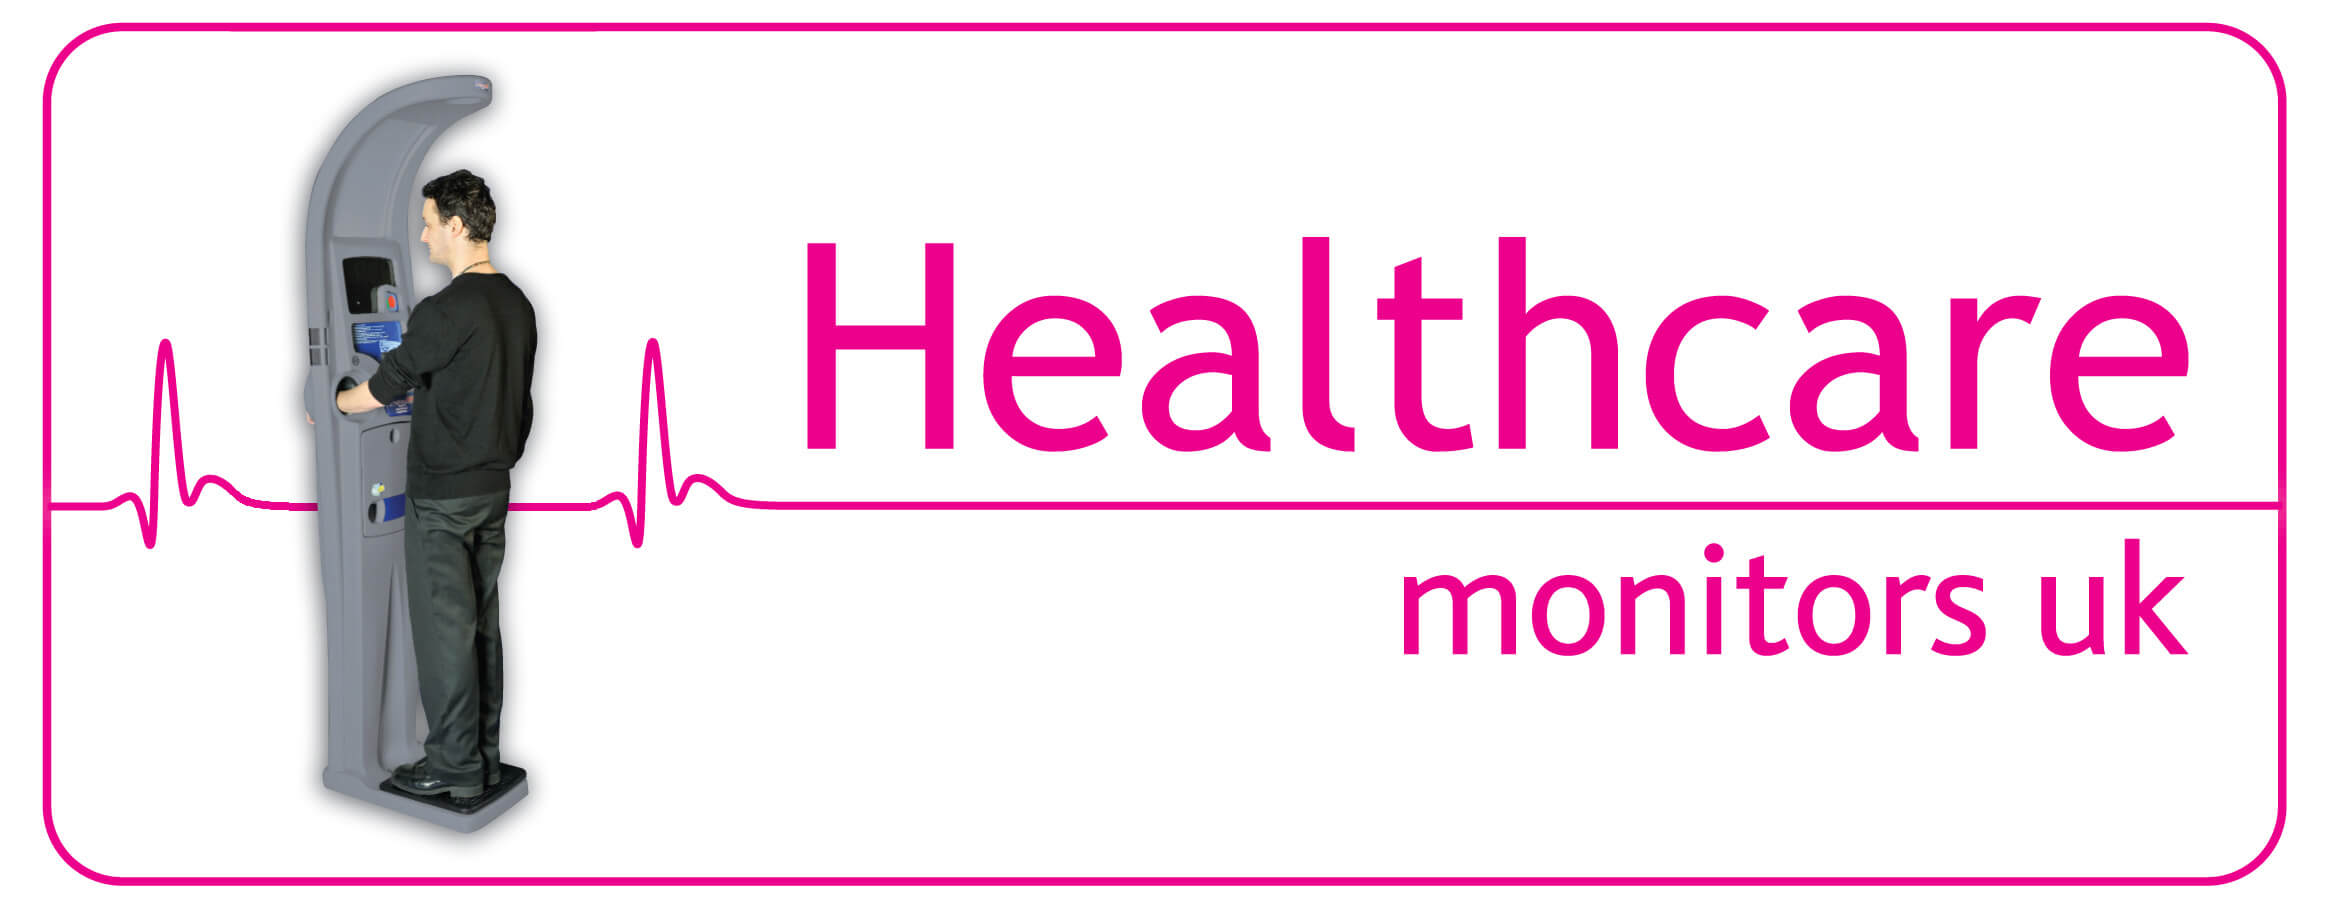 Healthcare Monitors UK Ltd